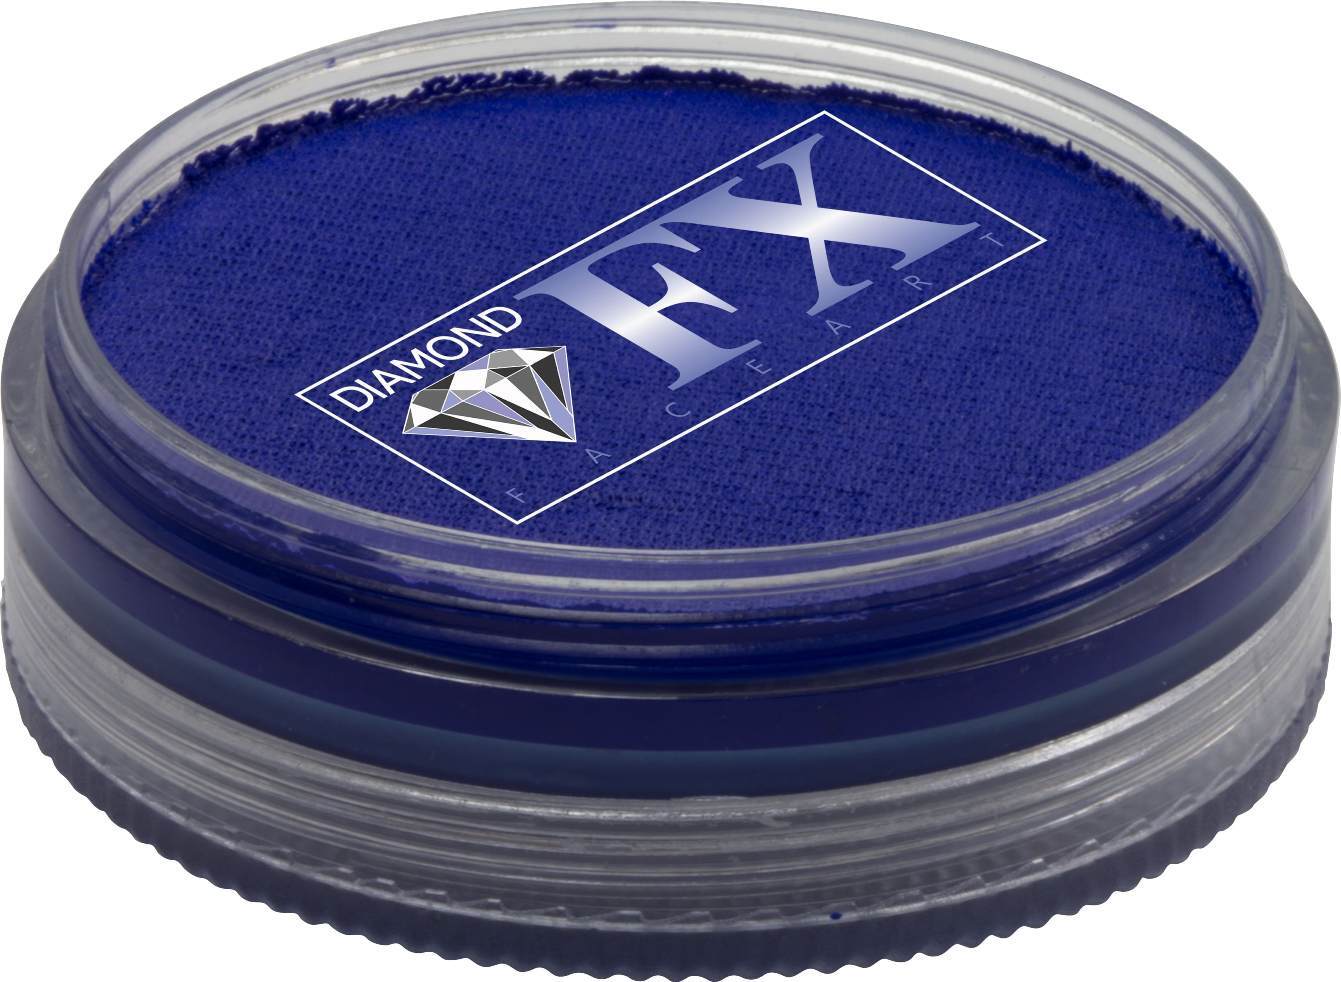 Diamond FX Blue 45g - Small Image